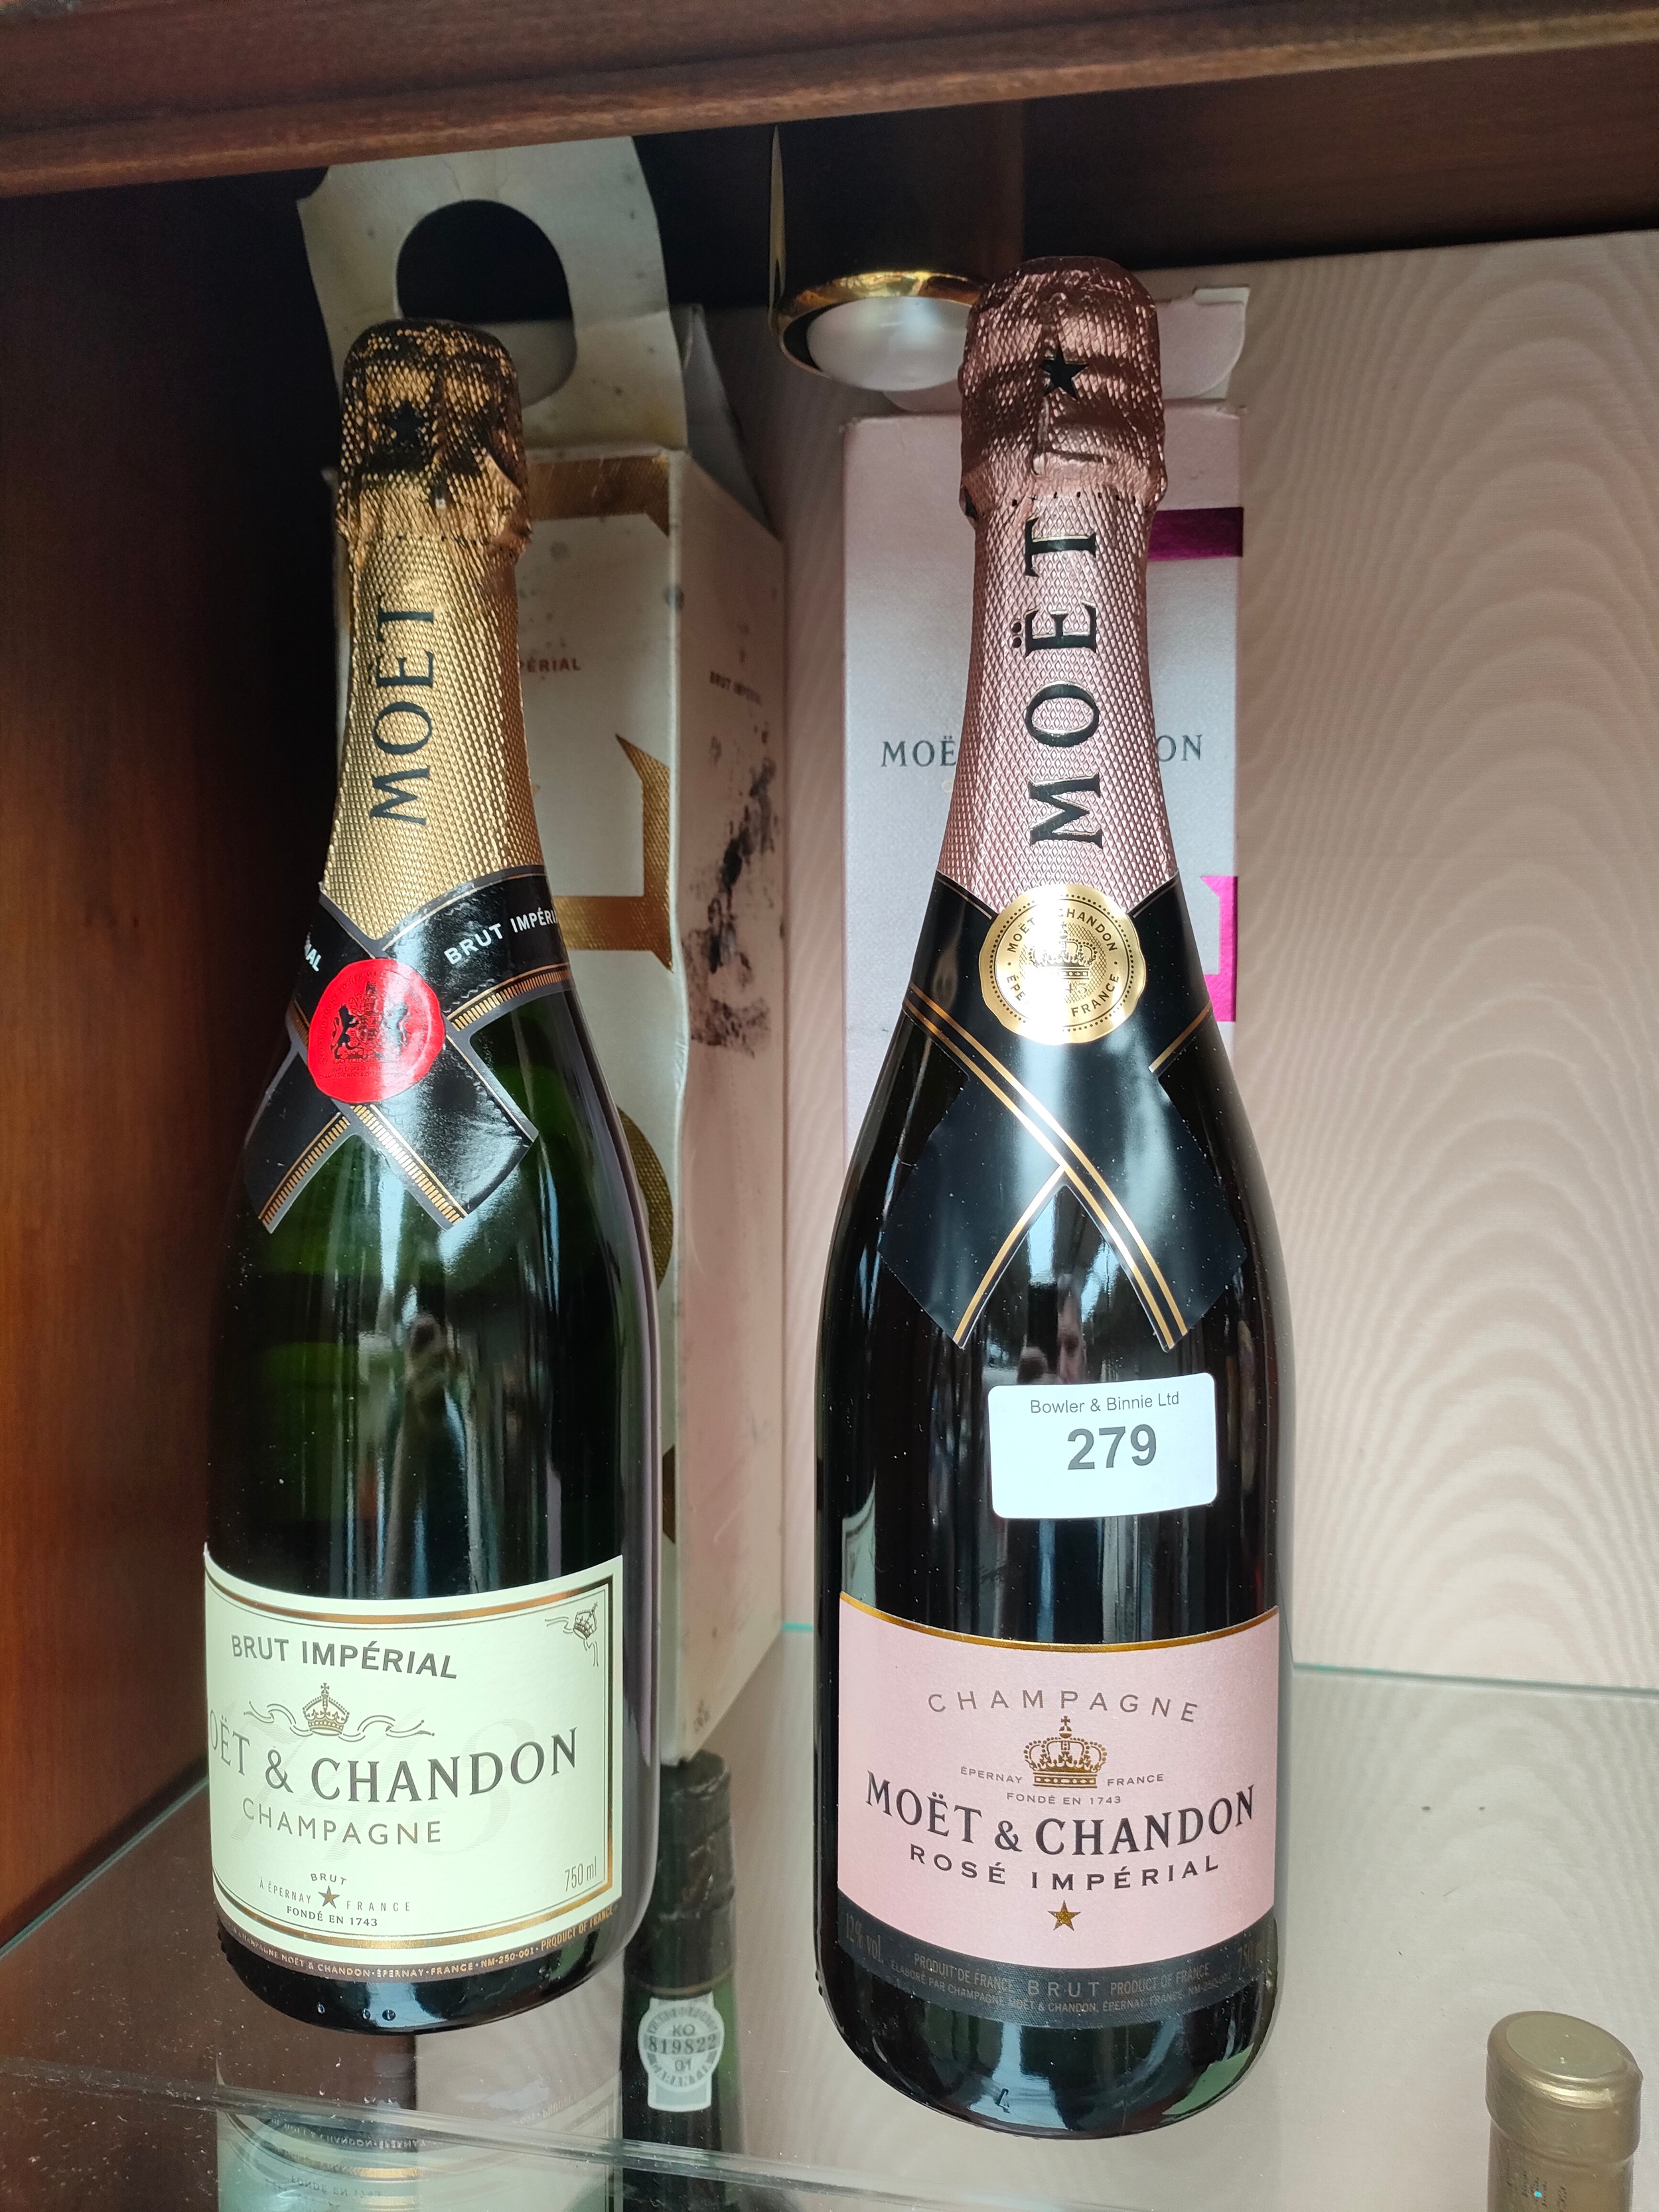 2 Bottles of Moet Chandon champagne.